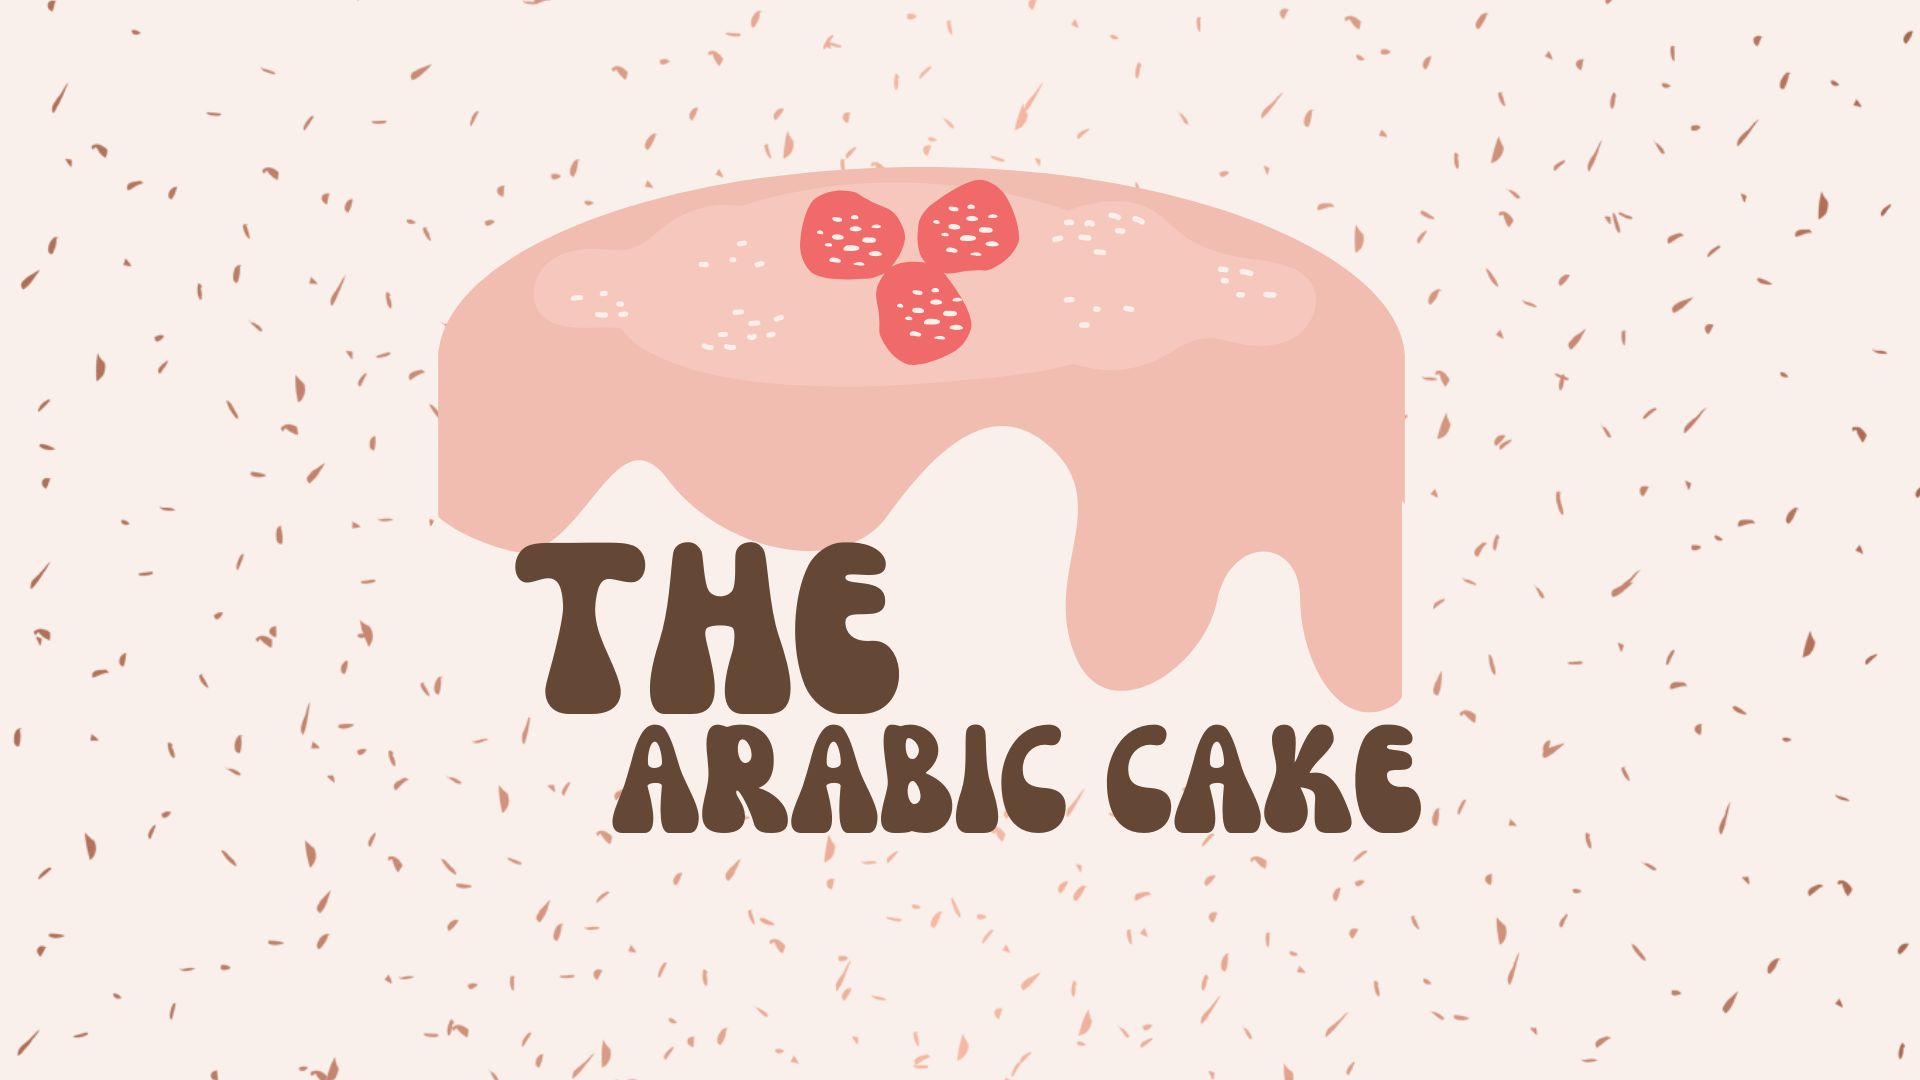 Arabic Cake 1